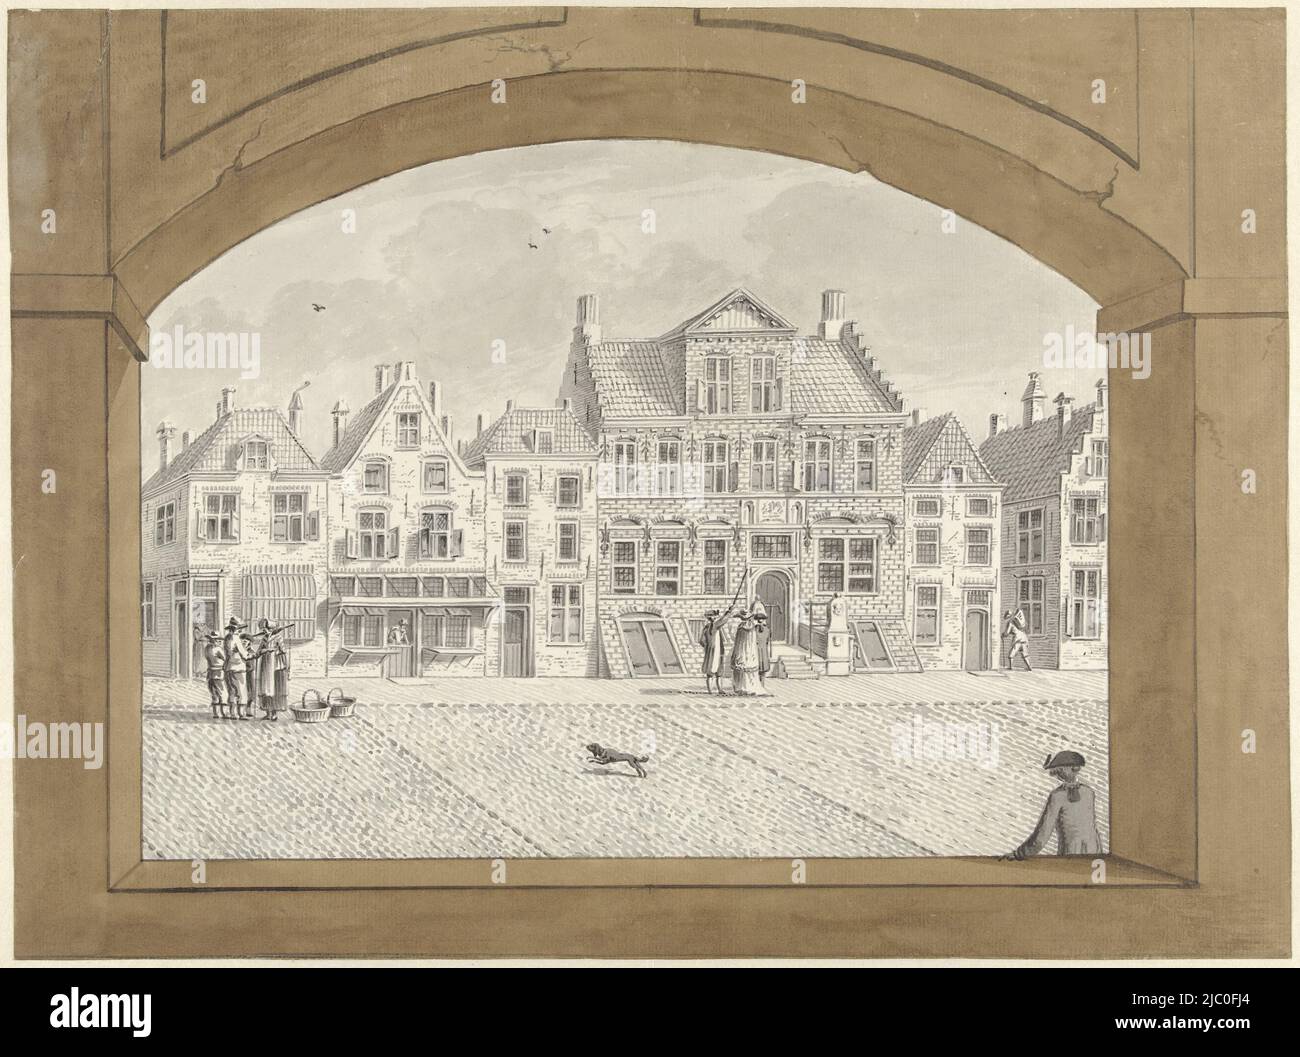 The house Hogelande in Middelburg, draughtsman: Dirk Verrijk, 1744 - 1786, paper, brush, pen, h 333 mm × w 447 mm Stock Photo